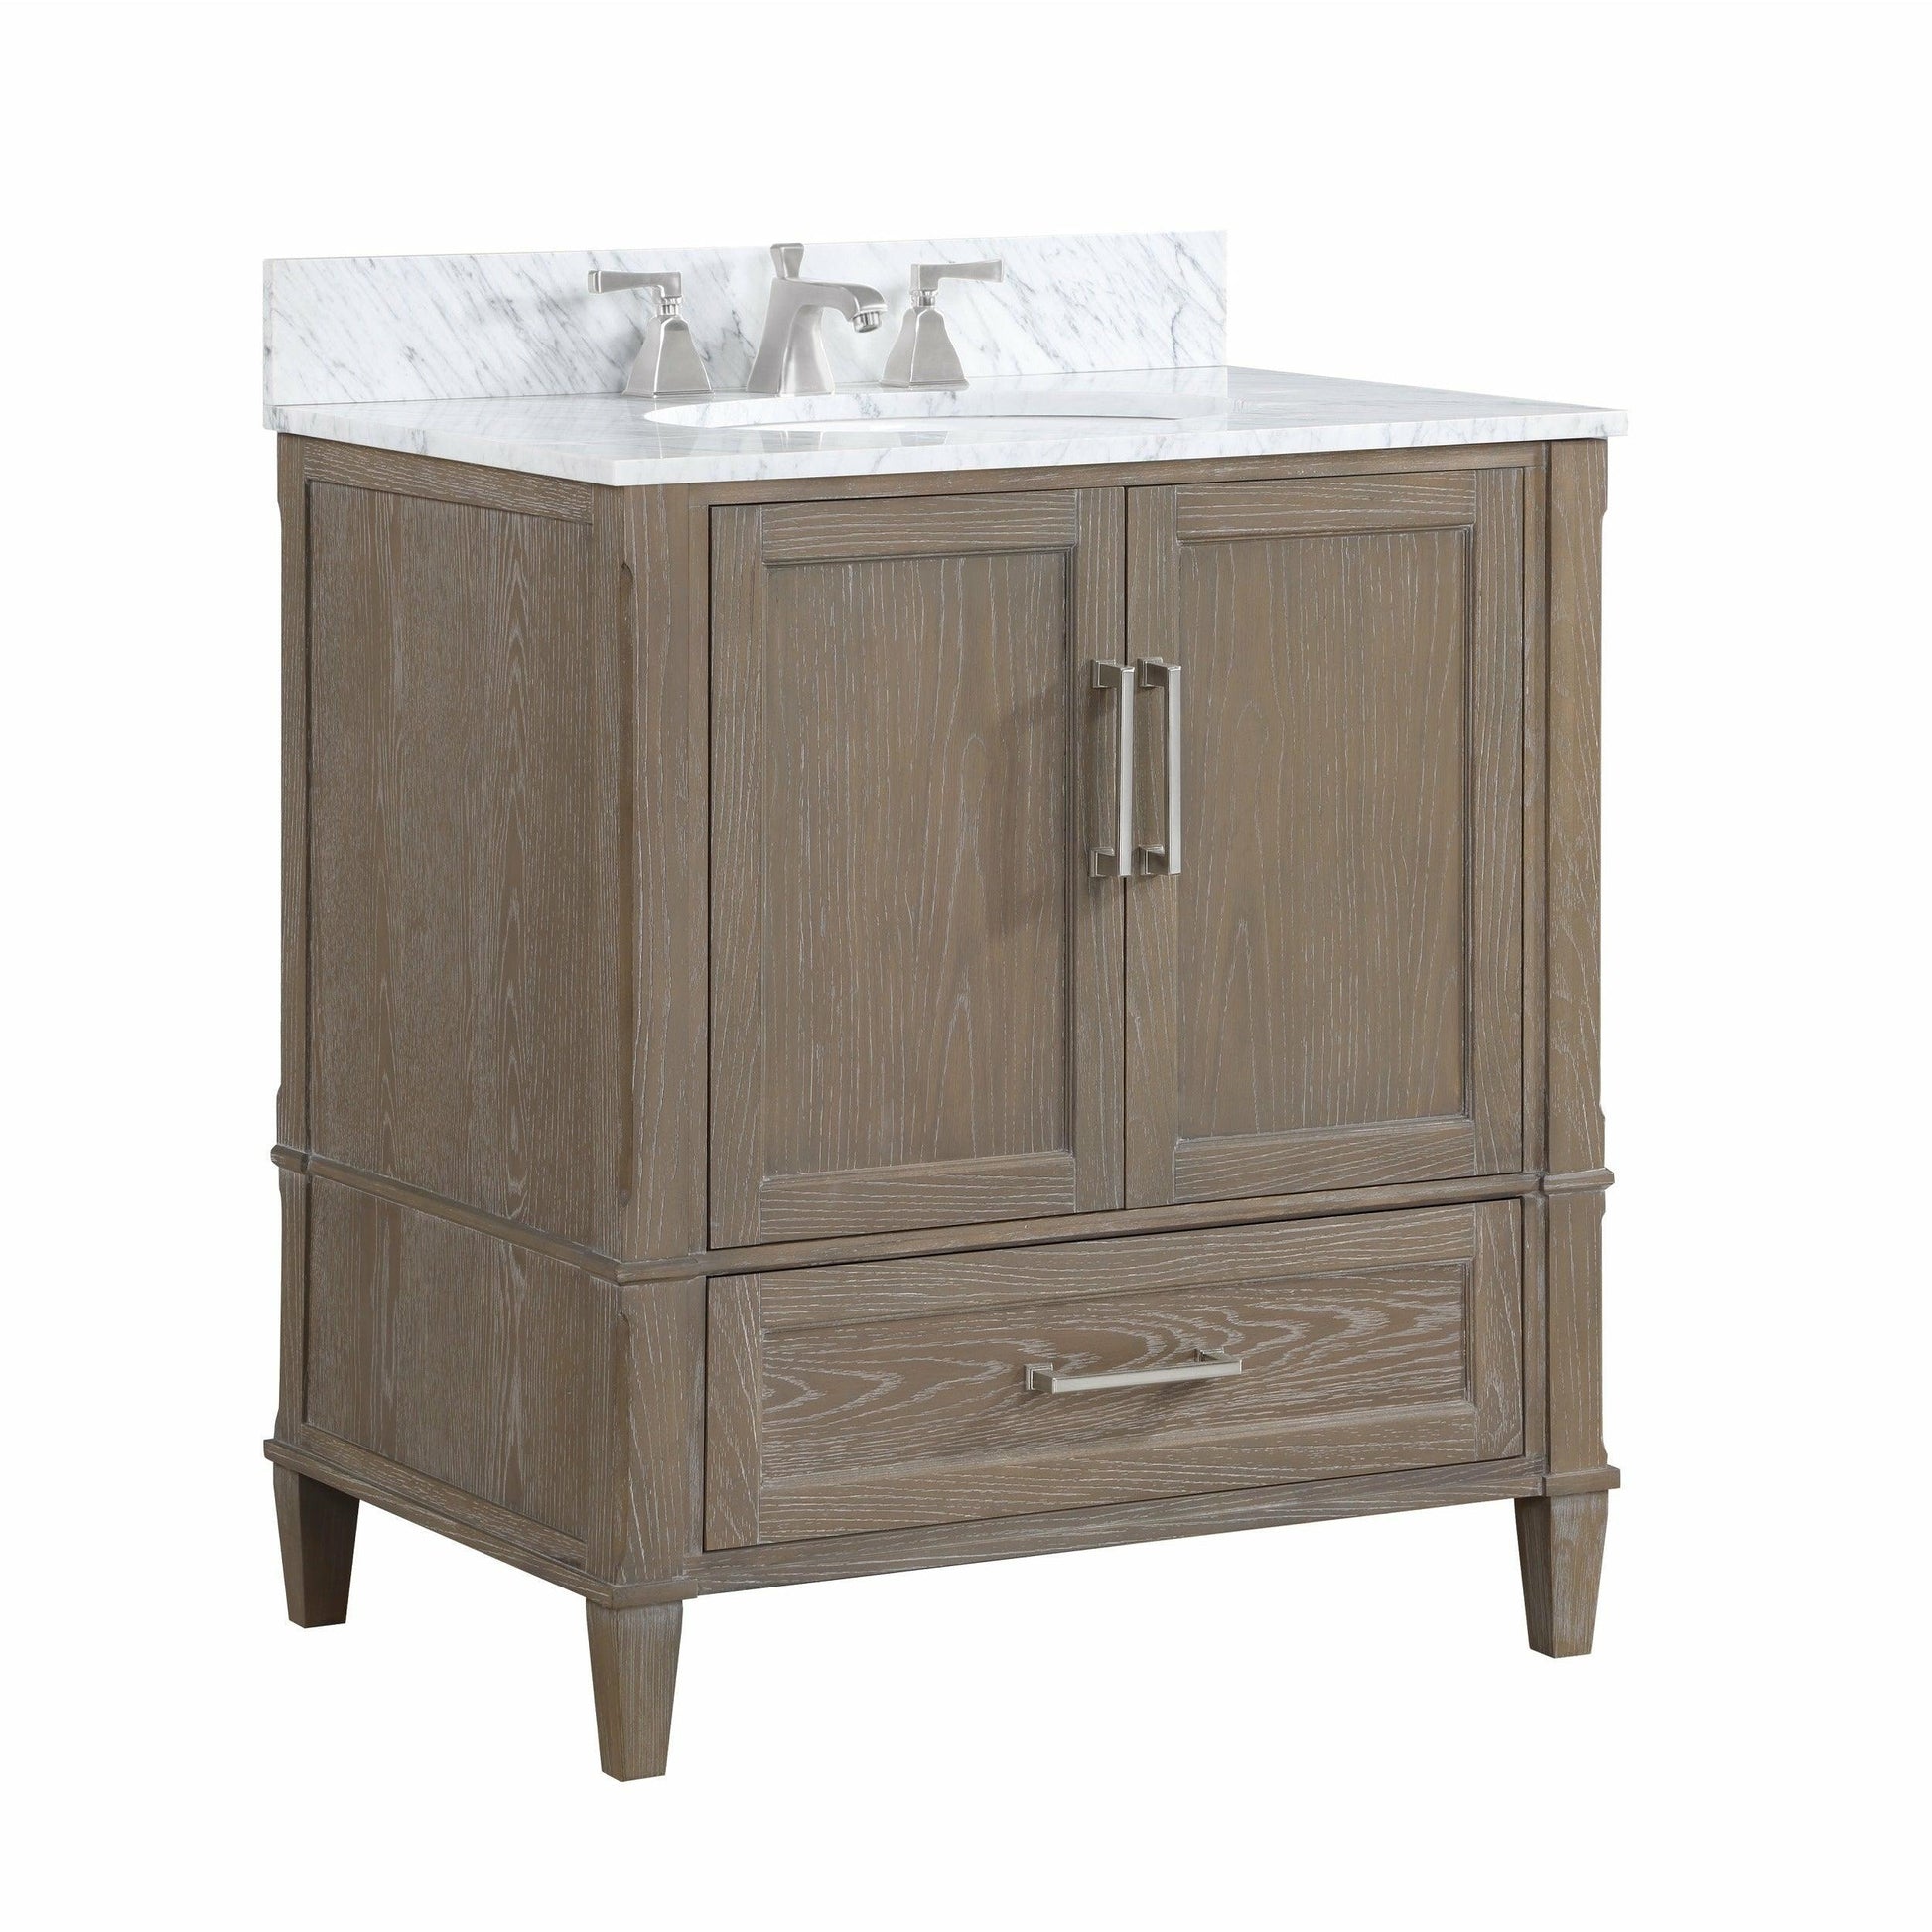 BEMMA Design Montauk Single Bathroom Vanity Set with White Quartz or Carrara Marble Top - Sea & Stone Bath